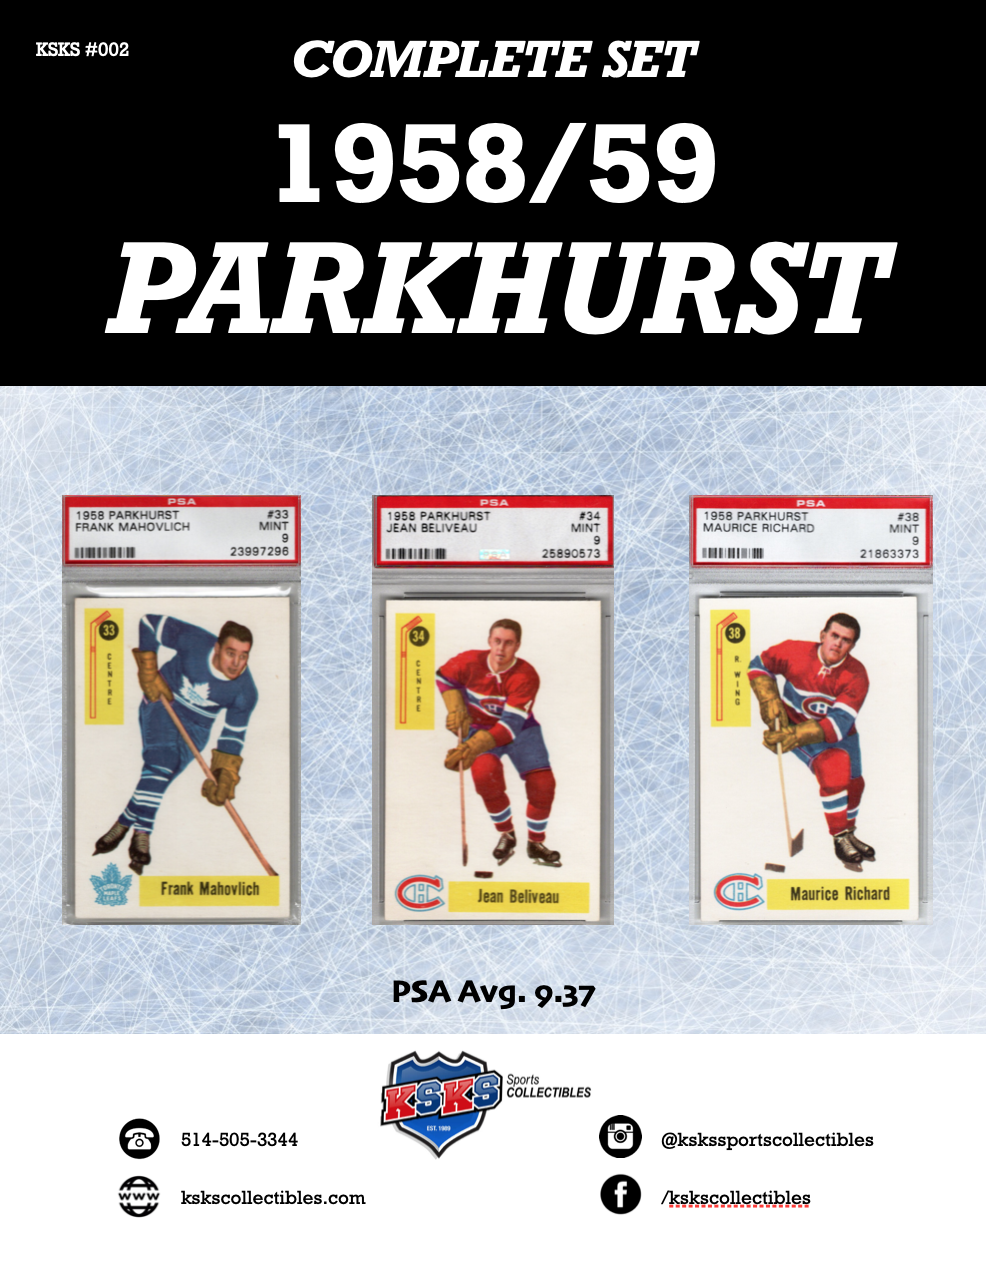 1958/59 Parkhurst Complete Set